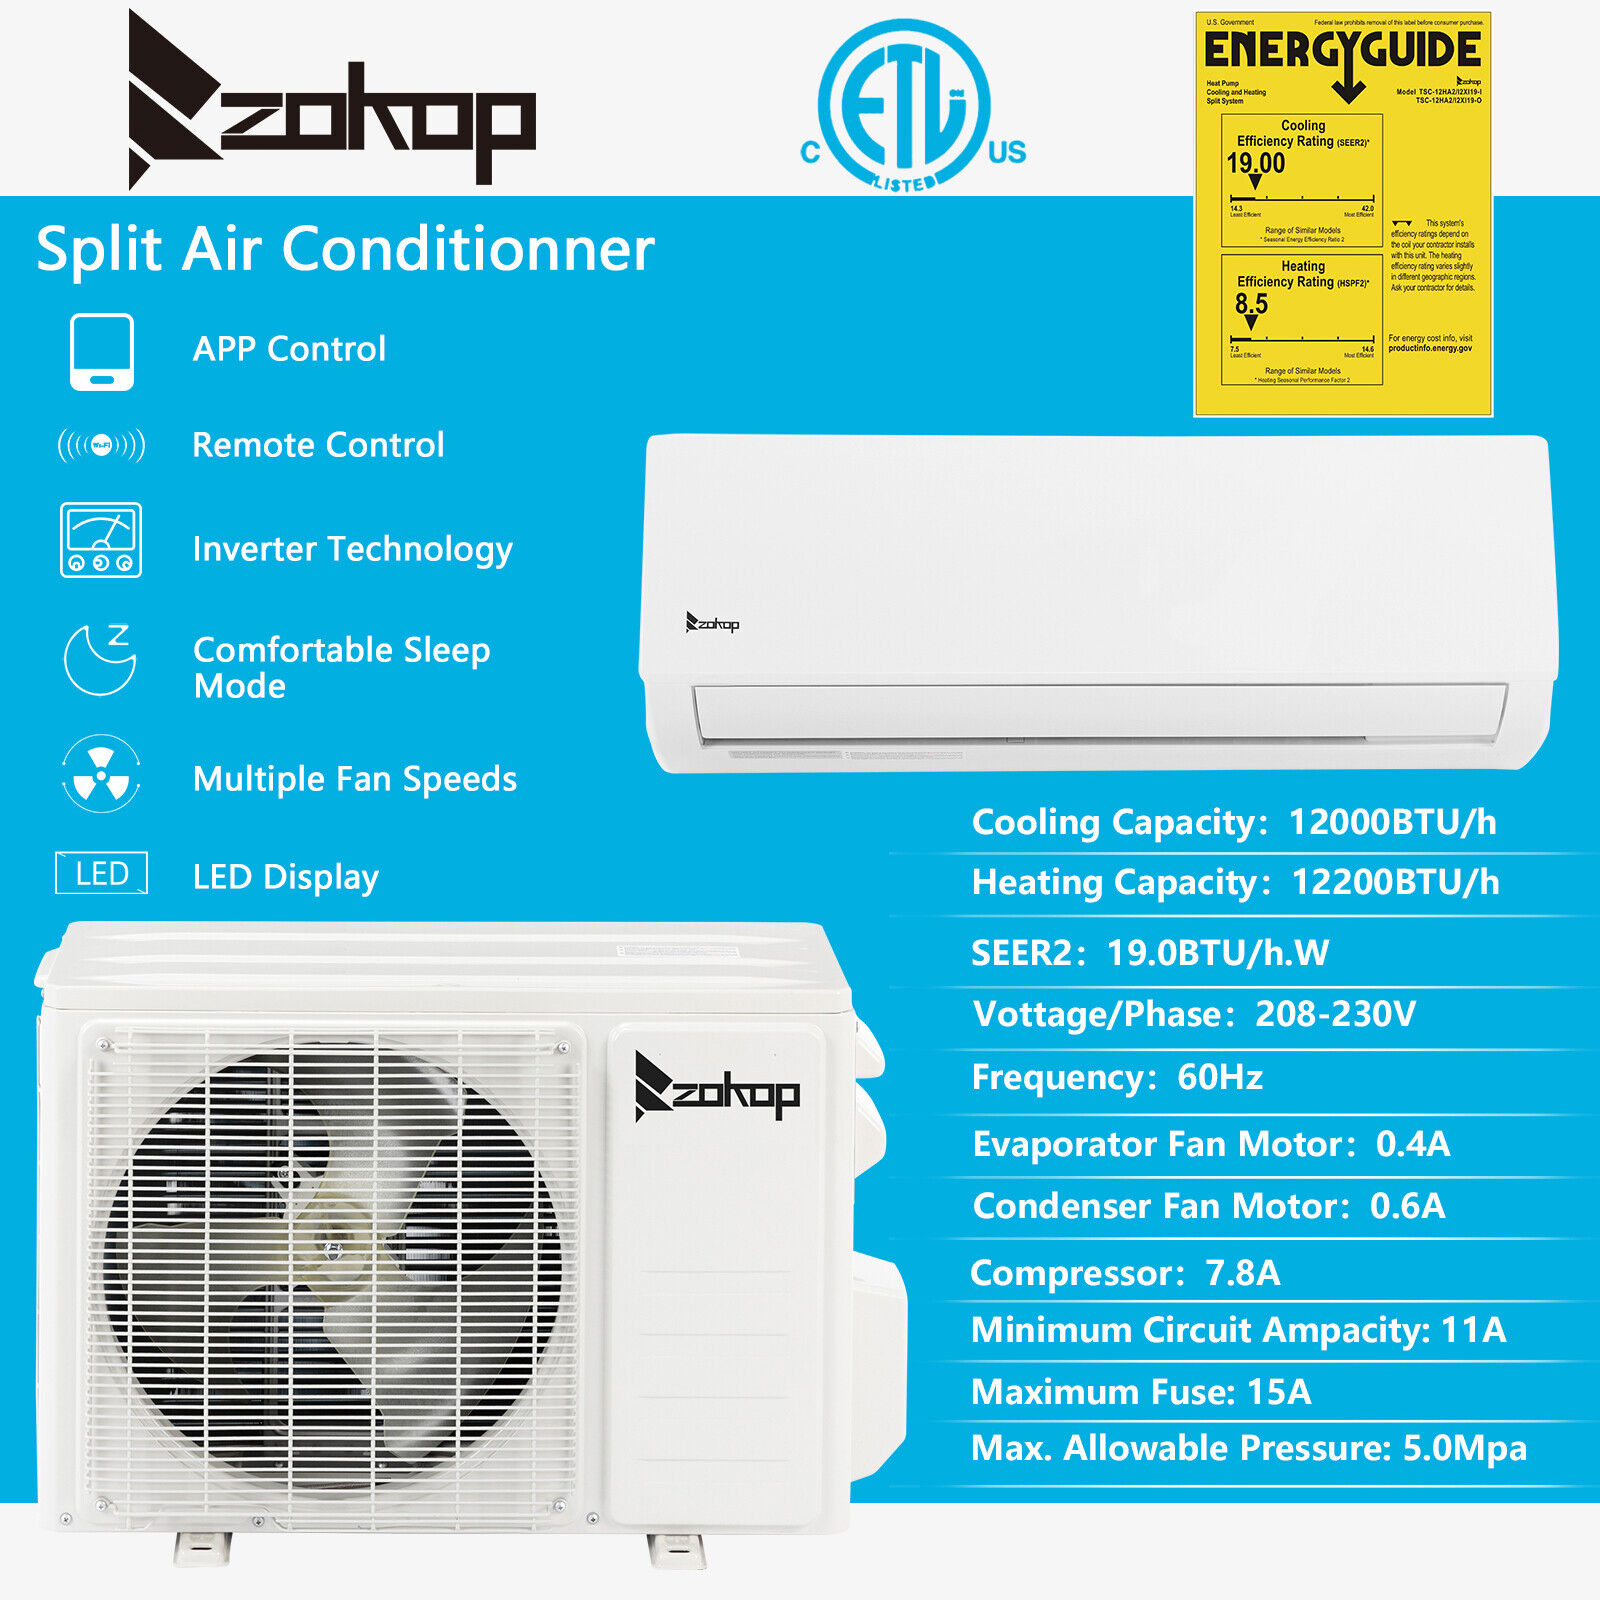 thinkstar 12000 Btu Inverter Split Air Conditioner 19 Seer Heat Home Apartment 230V